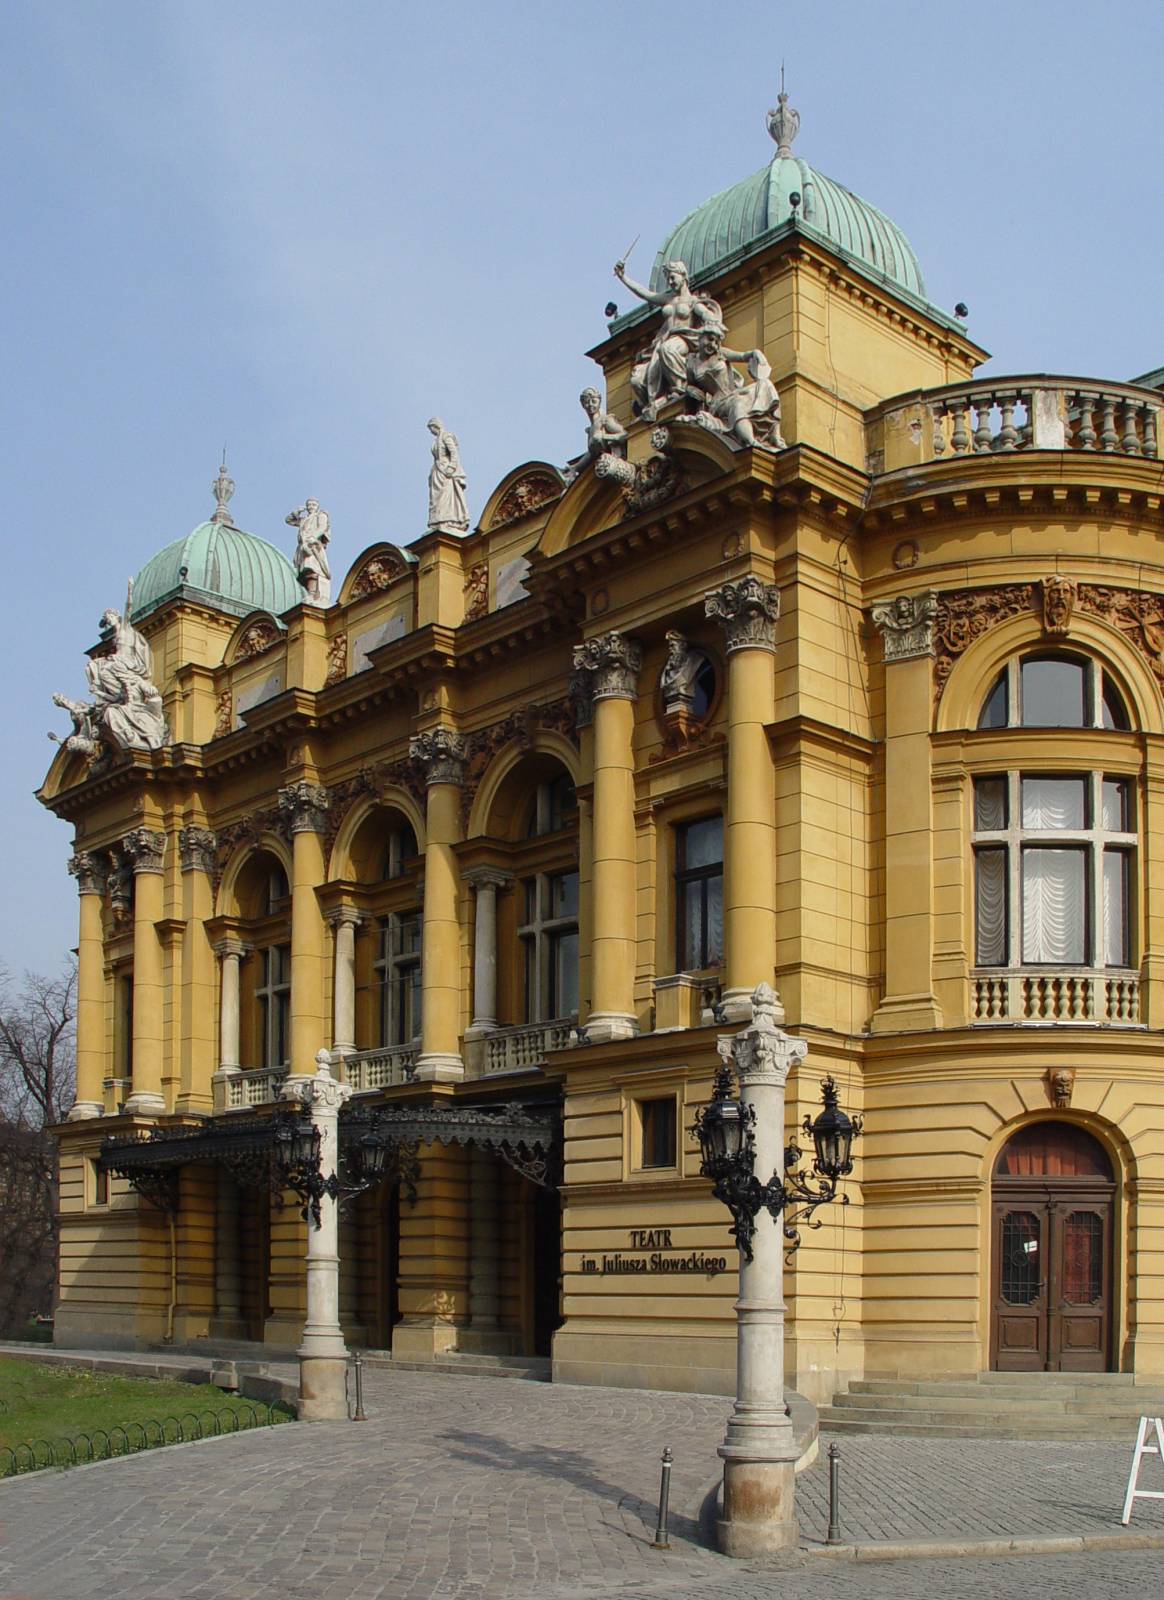 The Juliusz Słowacki Theatre